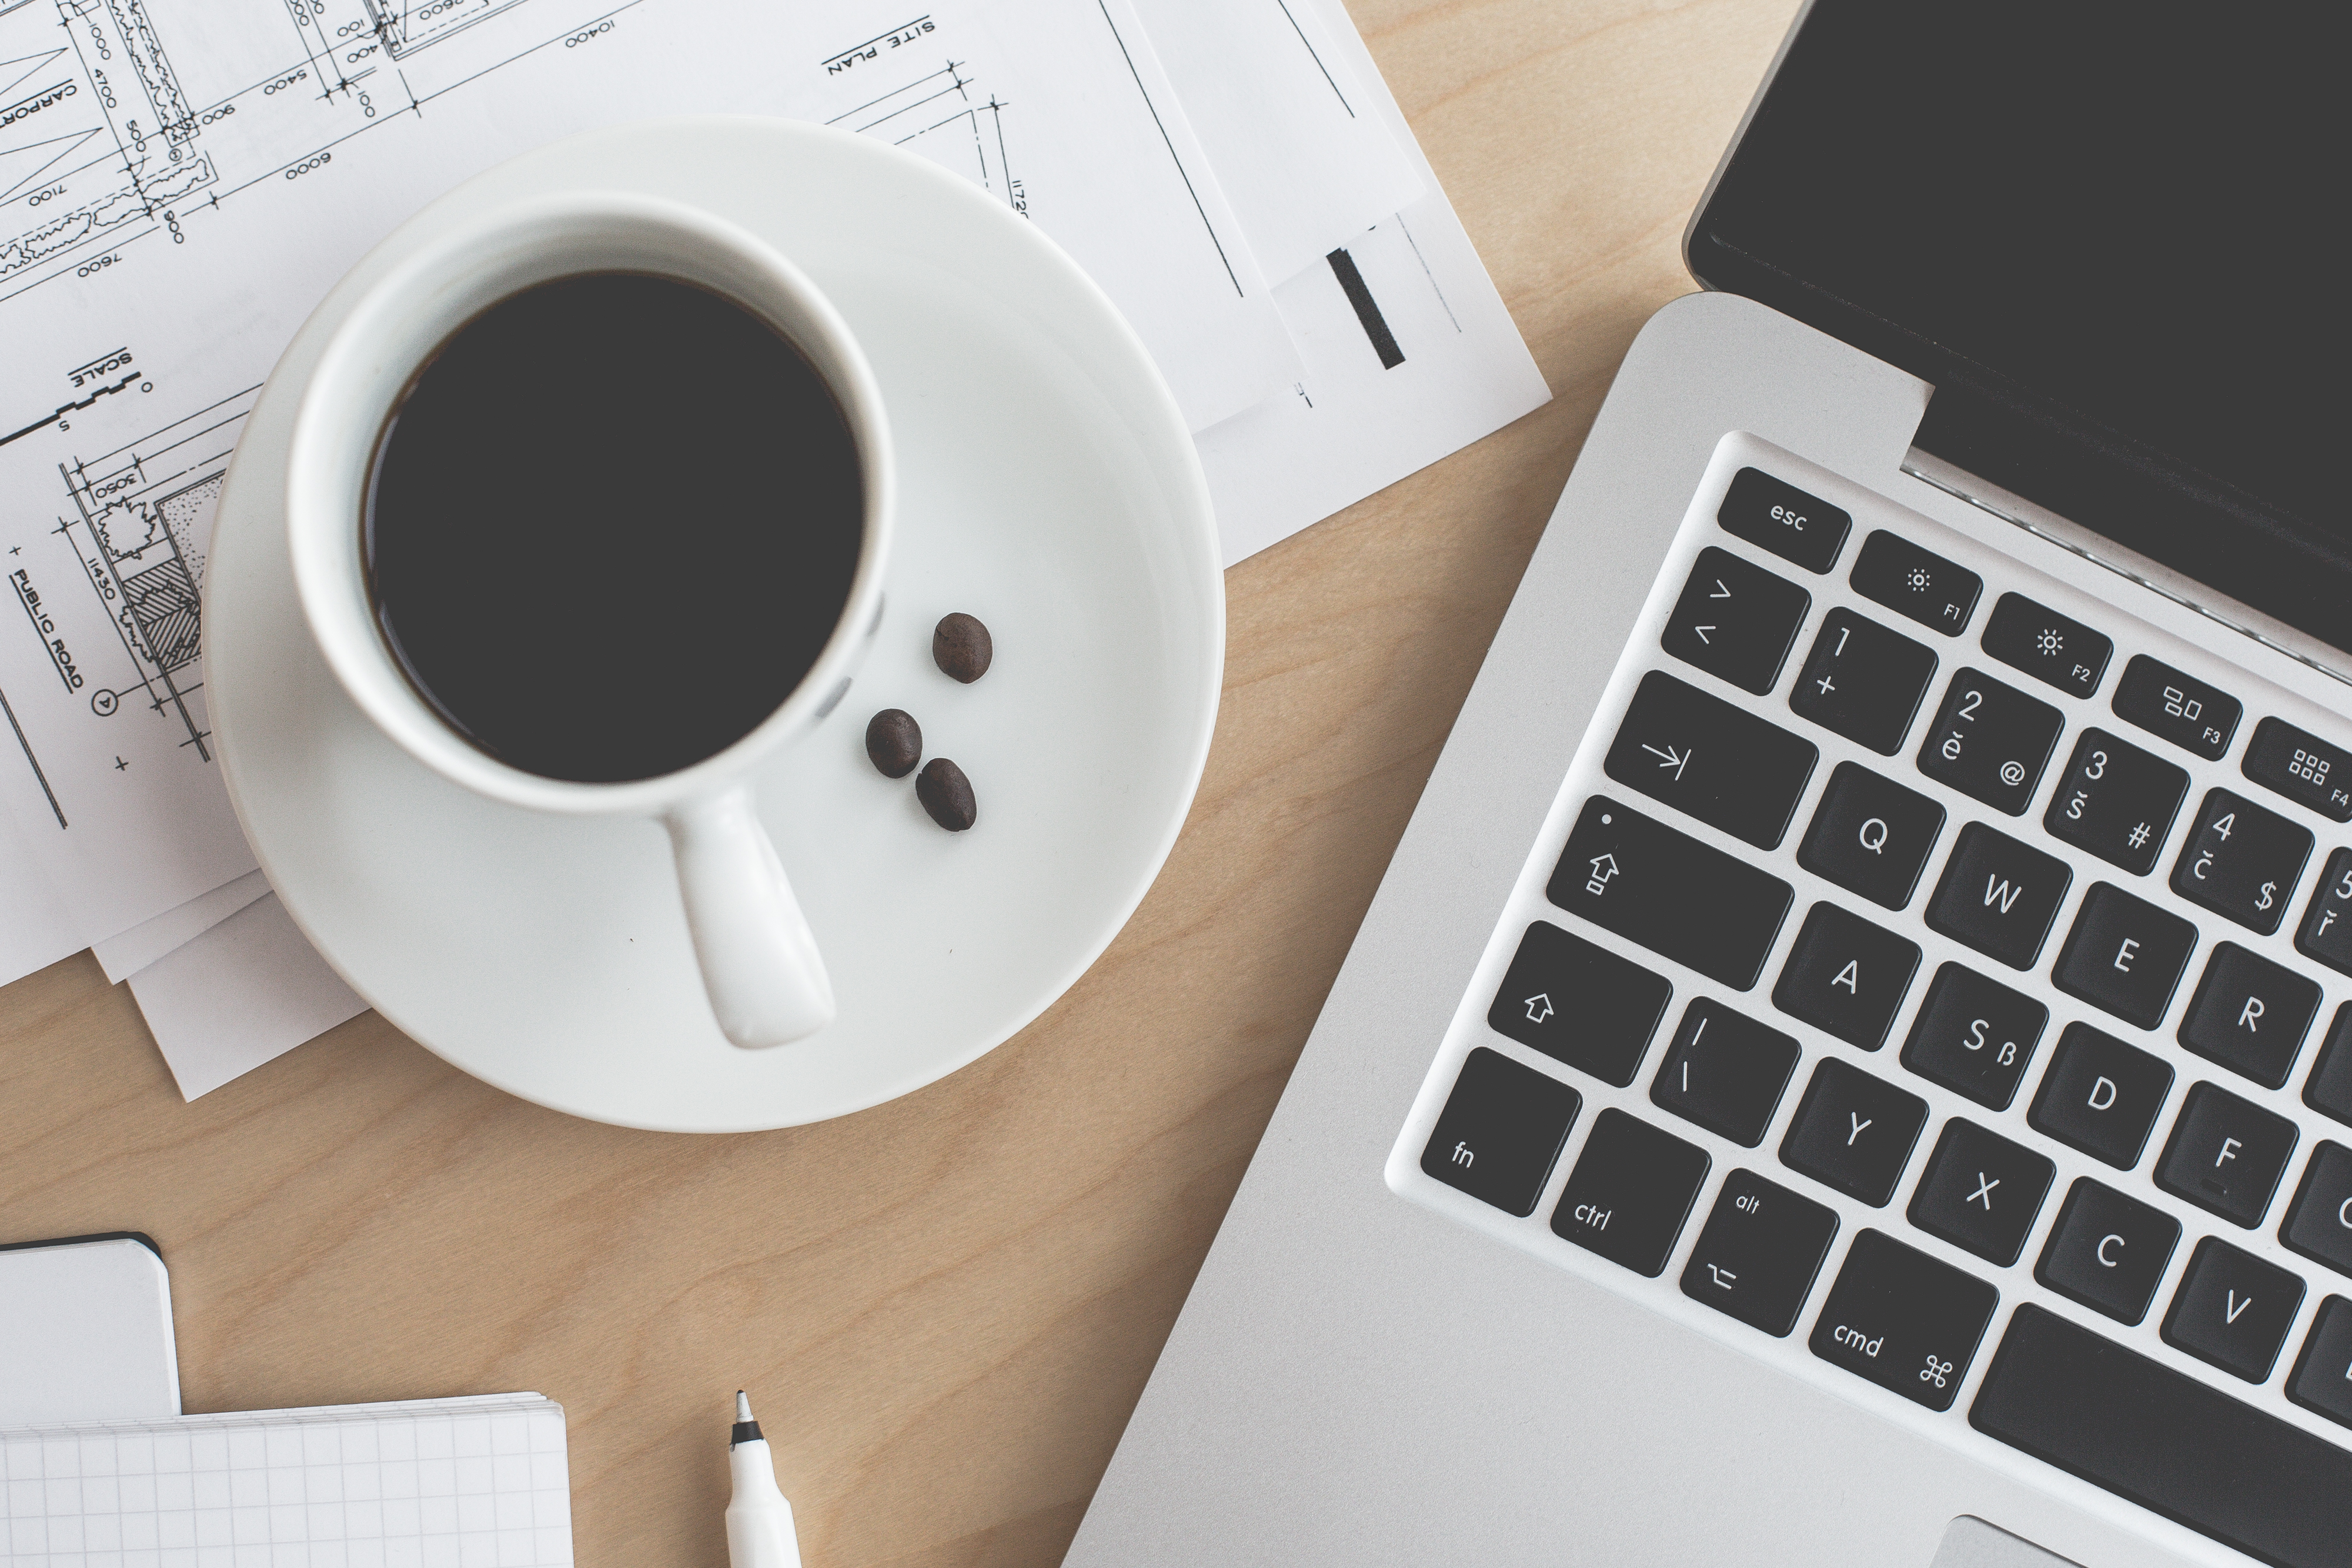 coffee-laptop-business-work-still-life-picjumbo-com (1)